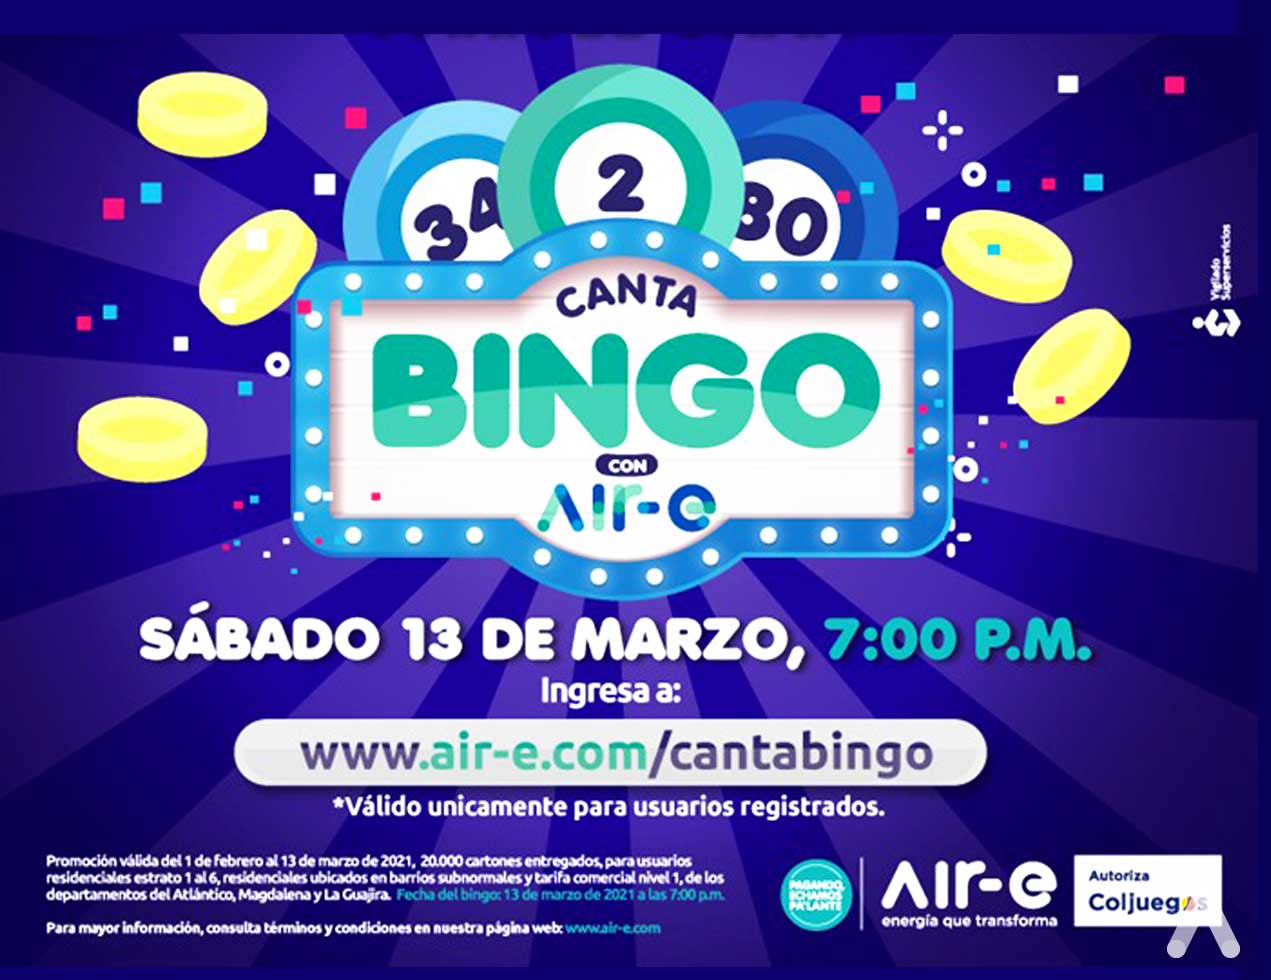 “Canta Bingo con Air-e” premia a los usuarios buenos pagadores con la factura de energía